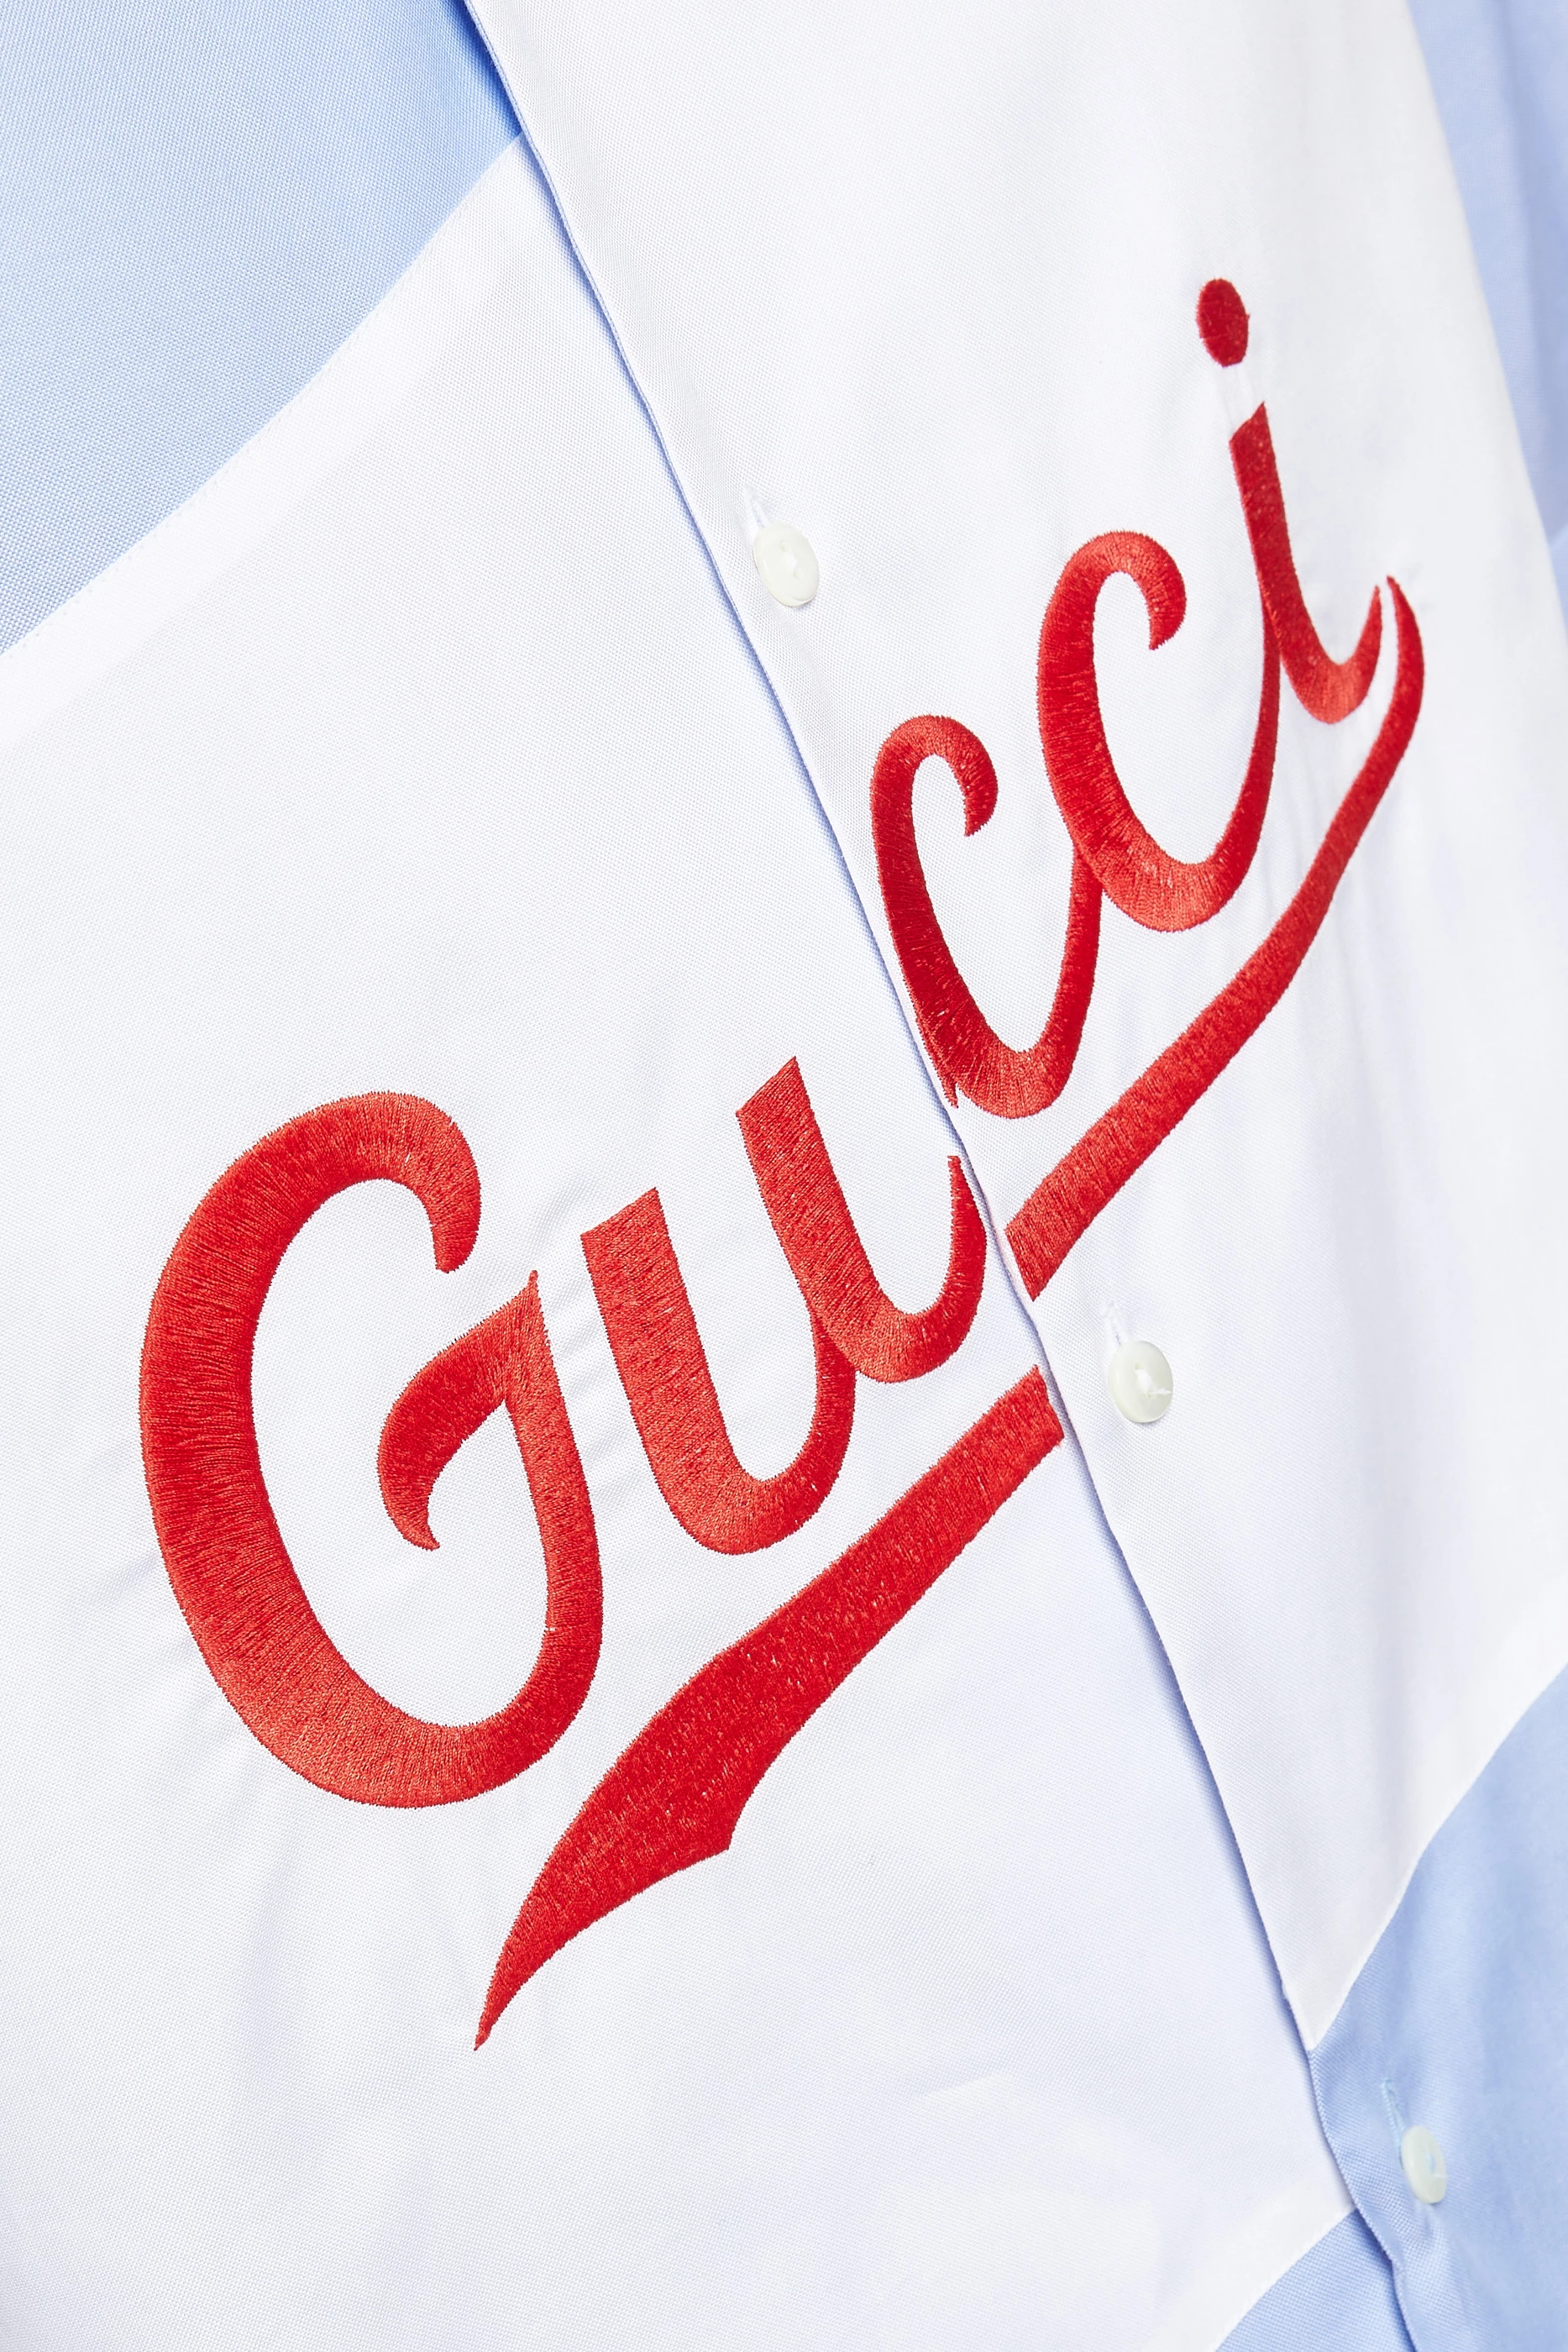 Gucci - Light Blue Paneled Script Logo Bowling Shirt – eluXive